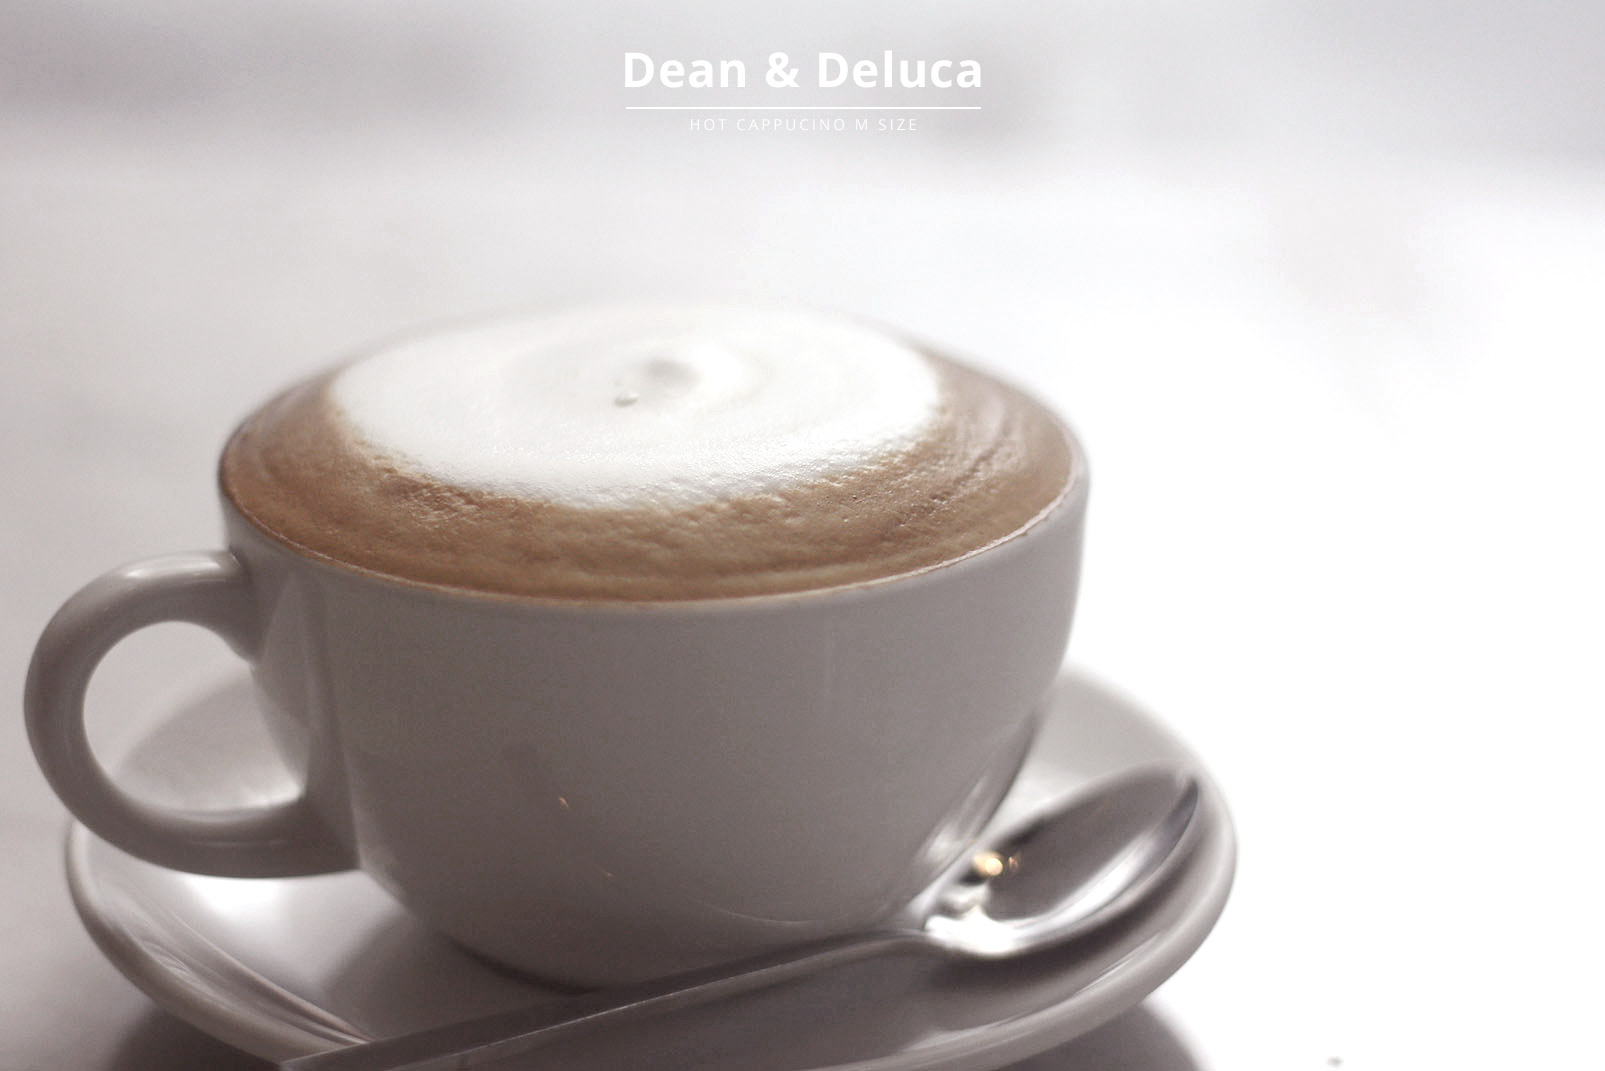 citibank-free-dean-and-deluca-hot-coffee-บัตรเครดิต กินฟรี สนามบิน